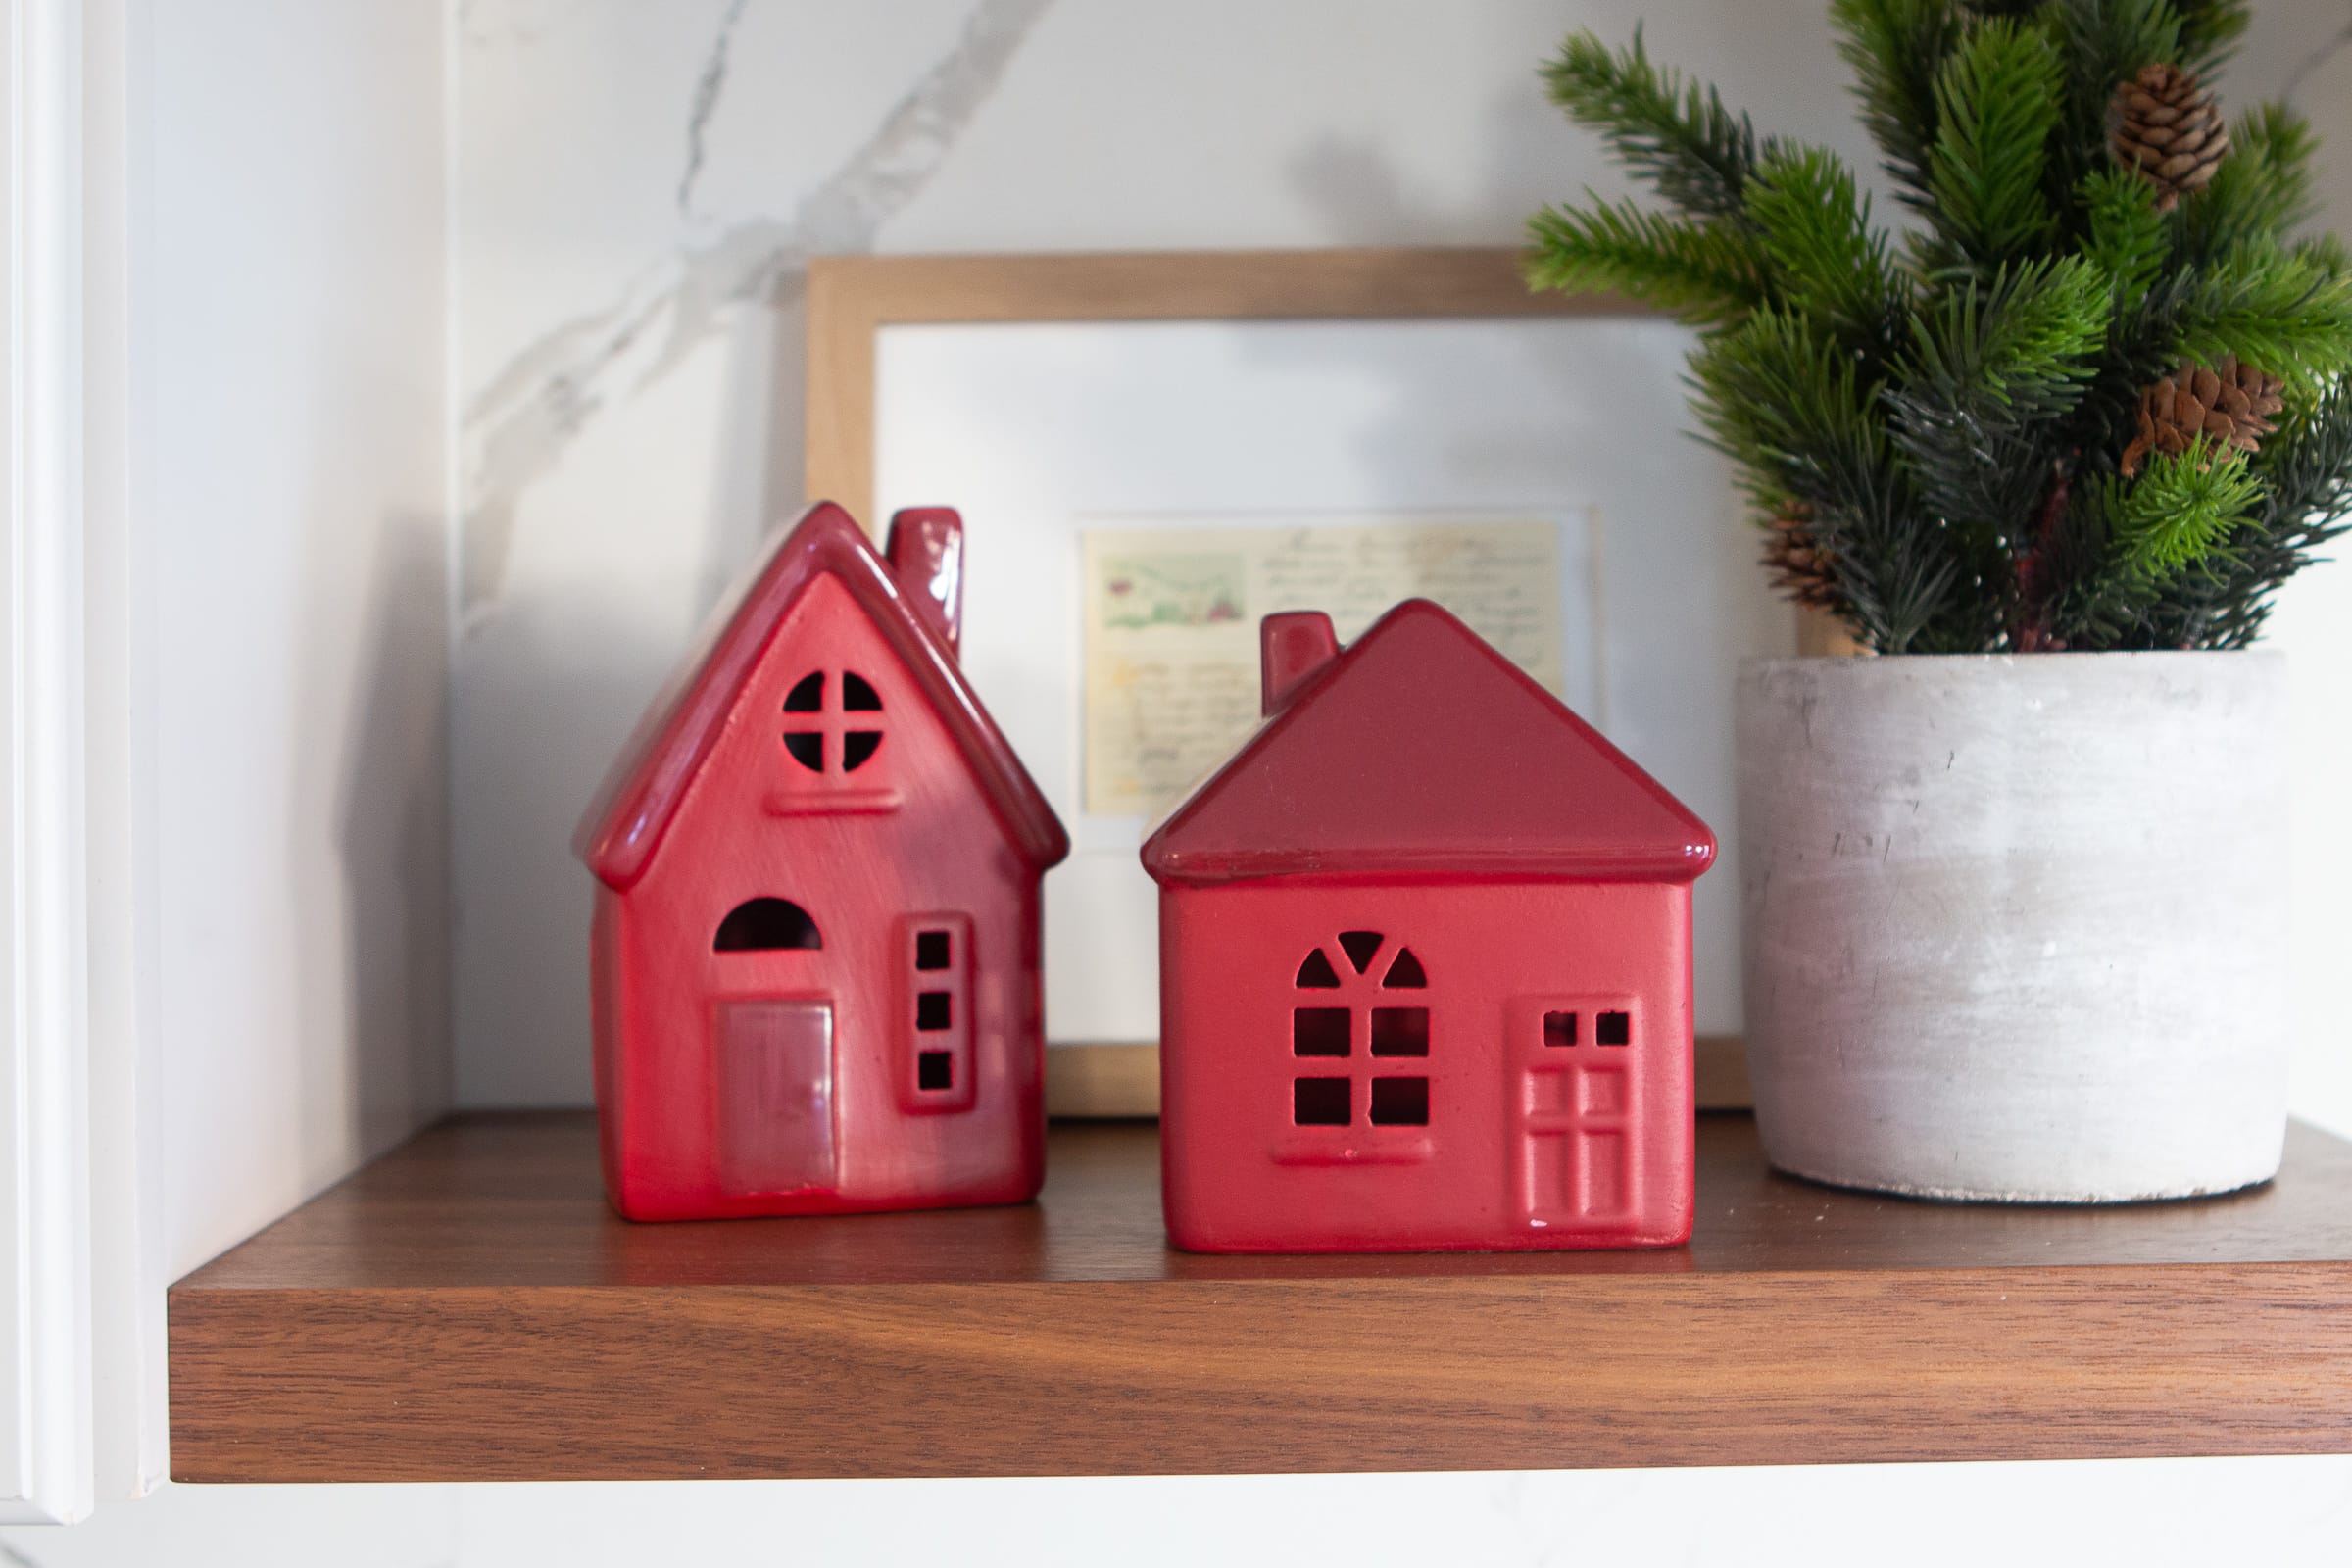 Adding red christmas houses to my display